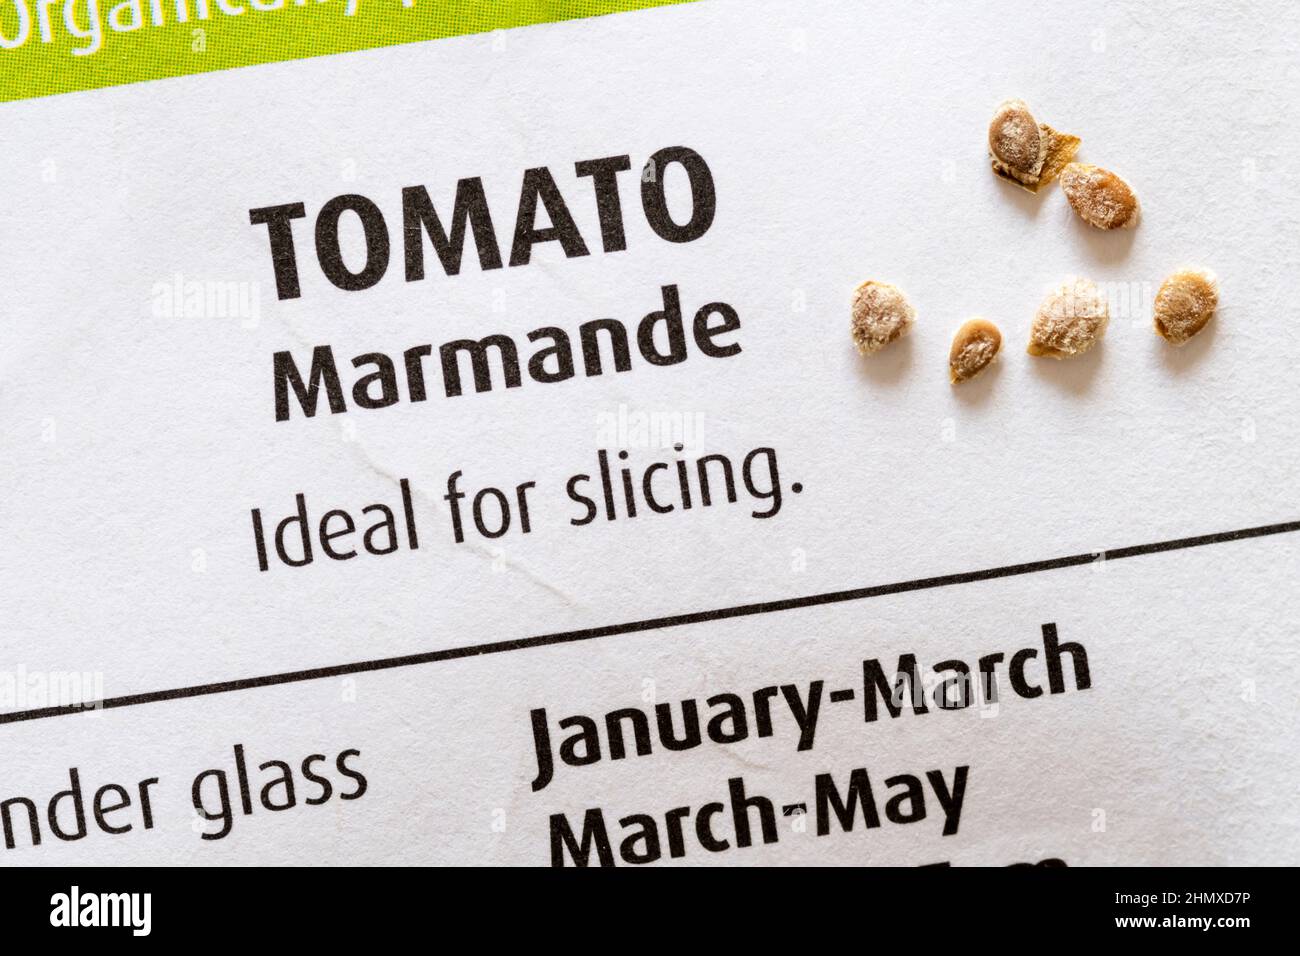 Marmande tomato seeds. Stock Photo